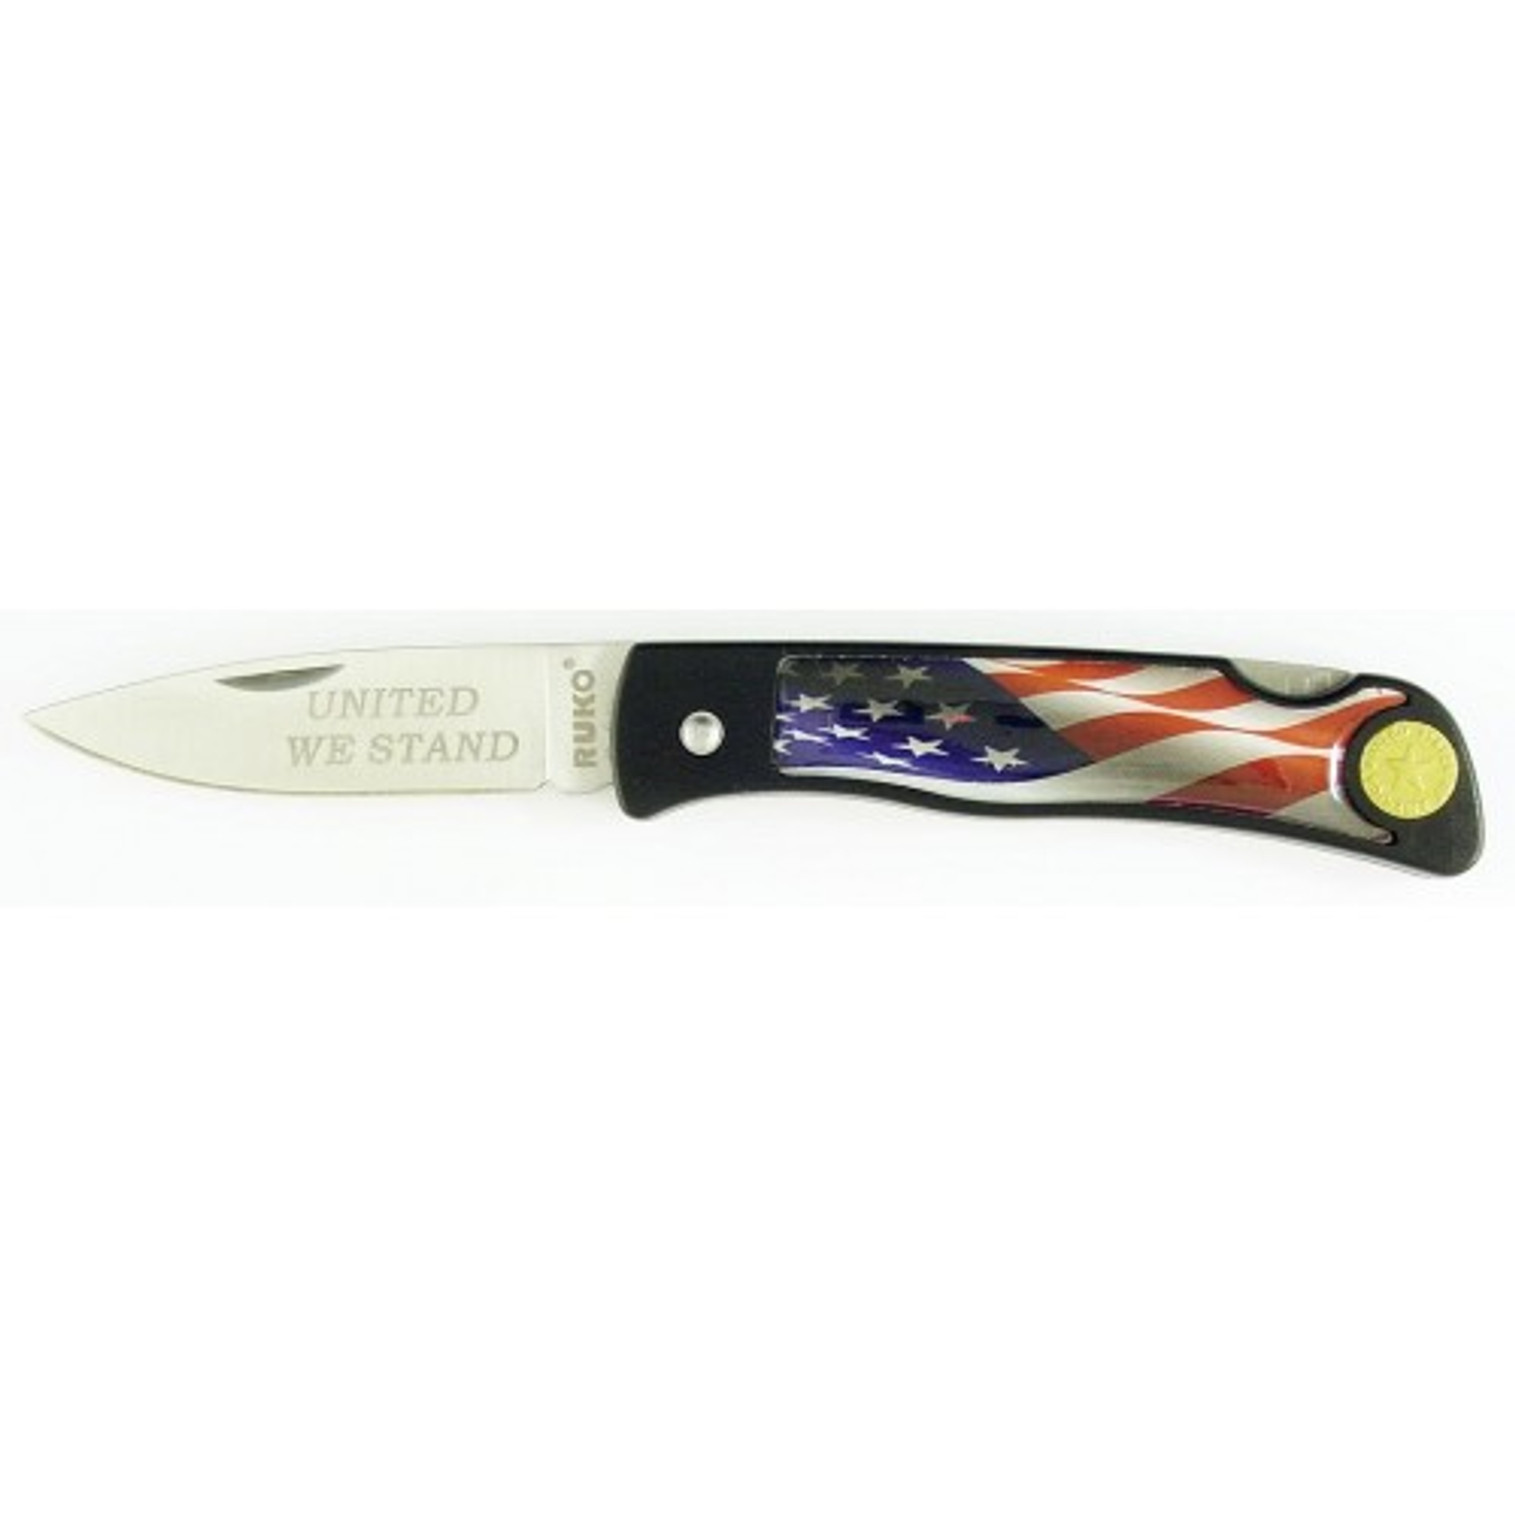 RUKO RUK0130USA, 420A, 2-1/2" Folding Blade Knife, USA Flag Image on Nylon Handle, boxed